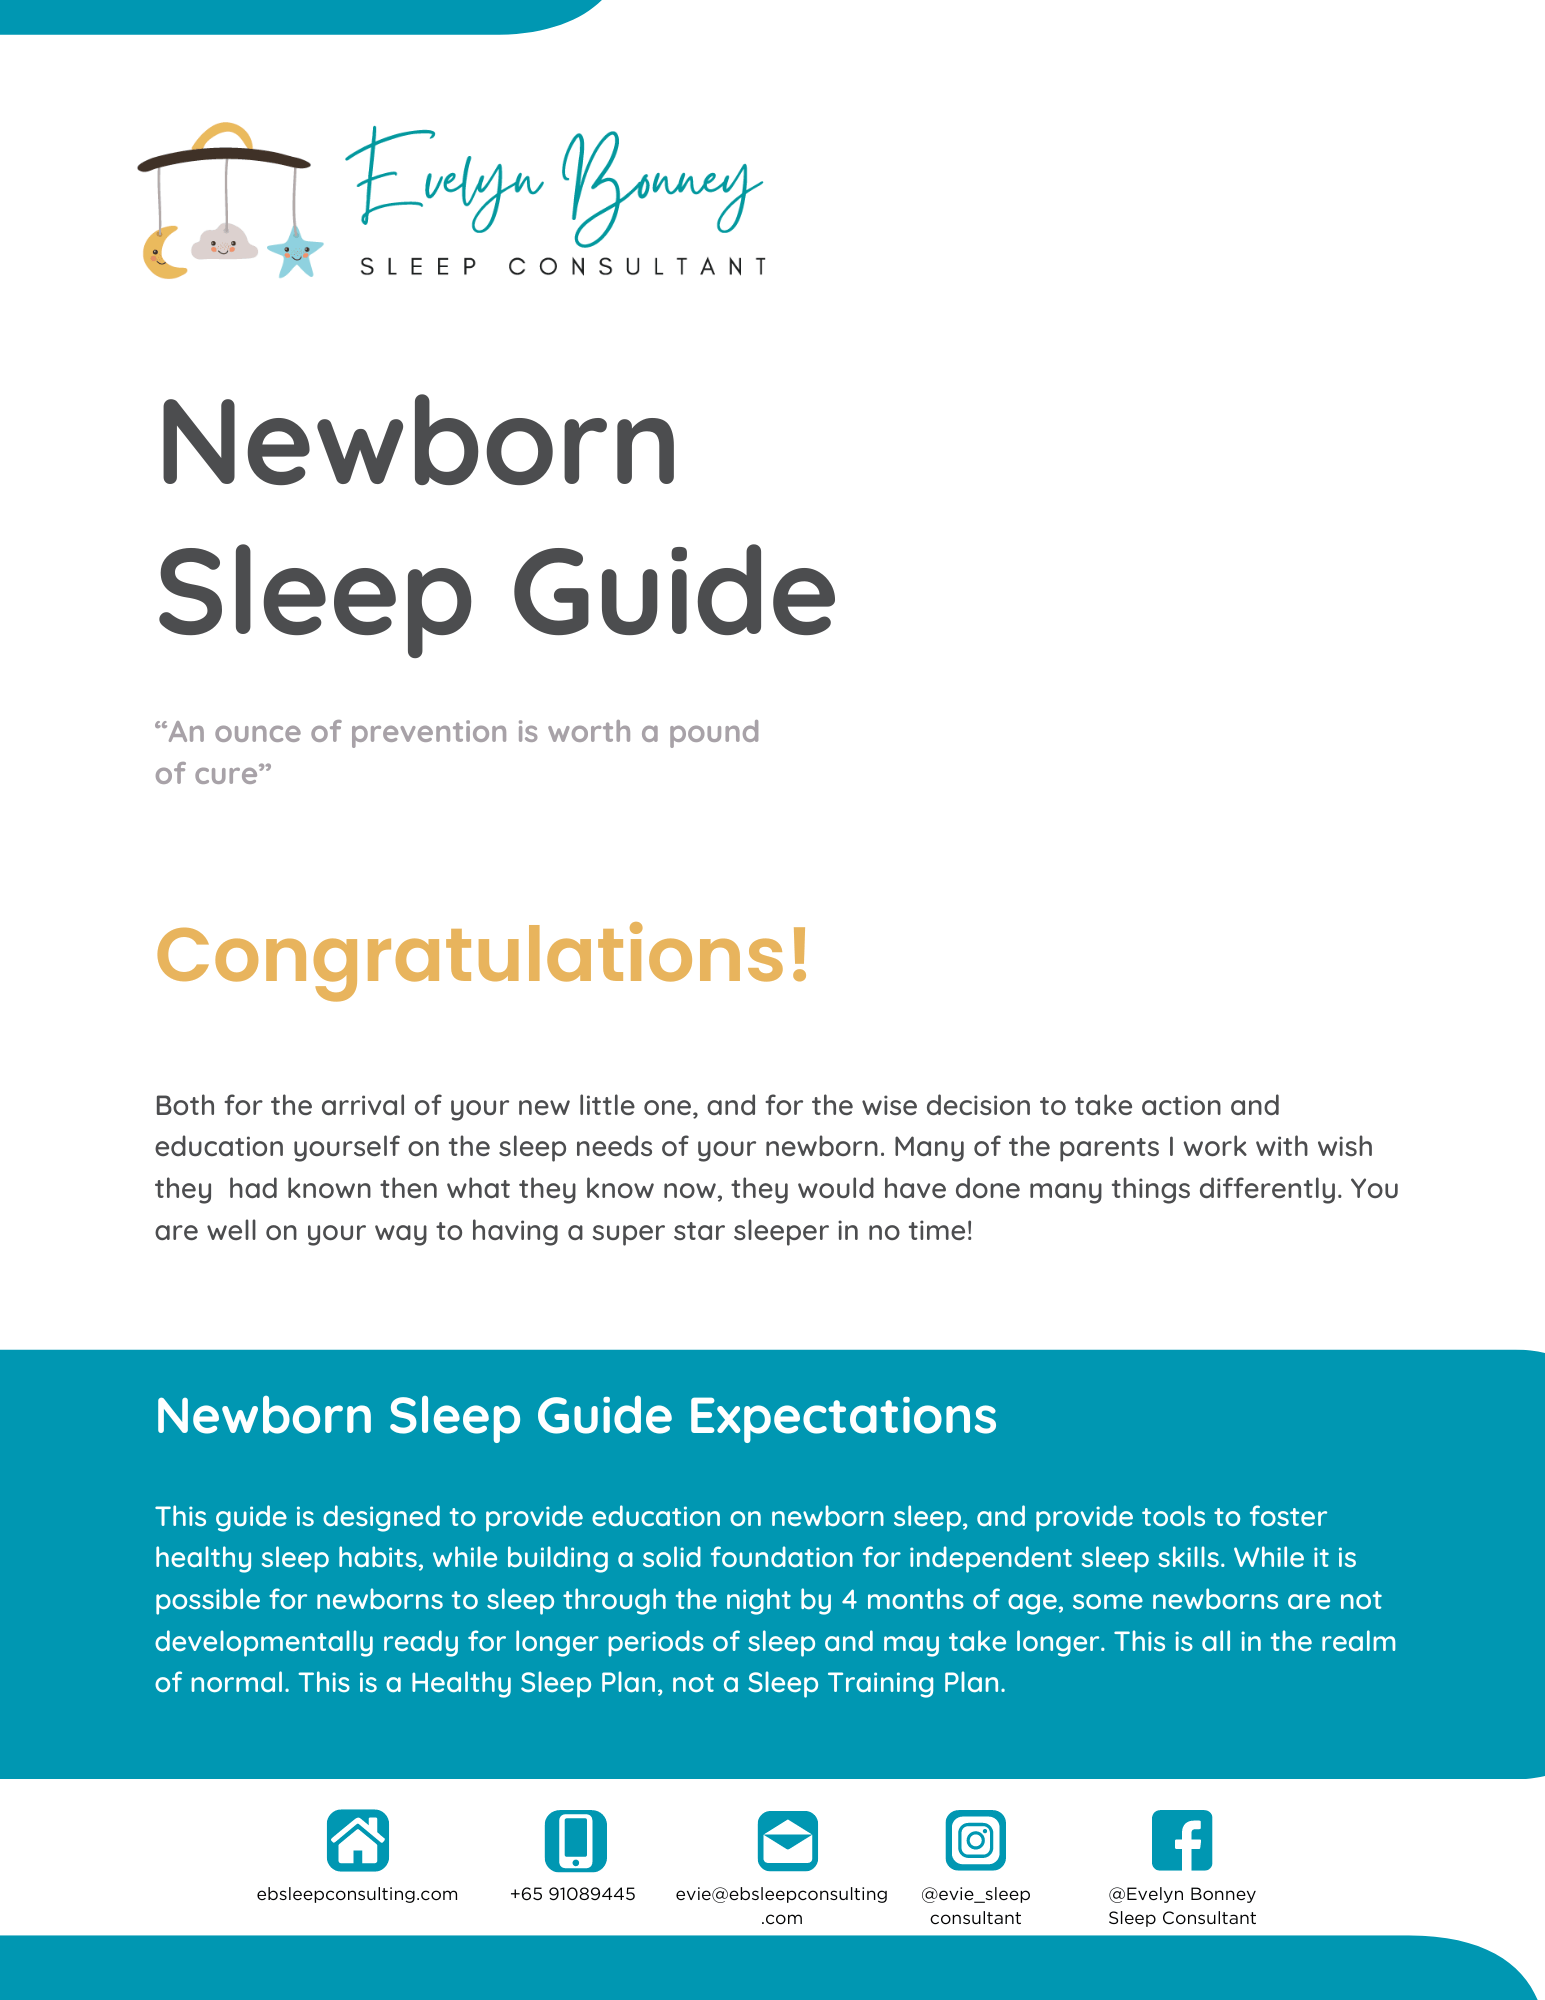 New born sleep guide